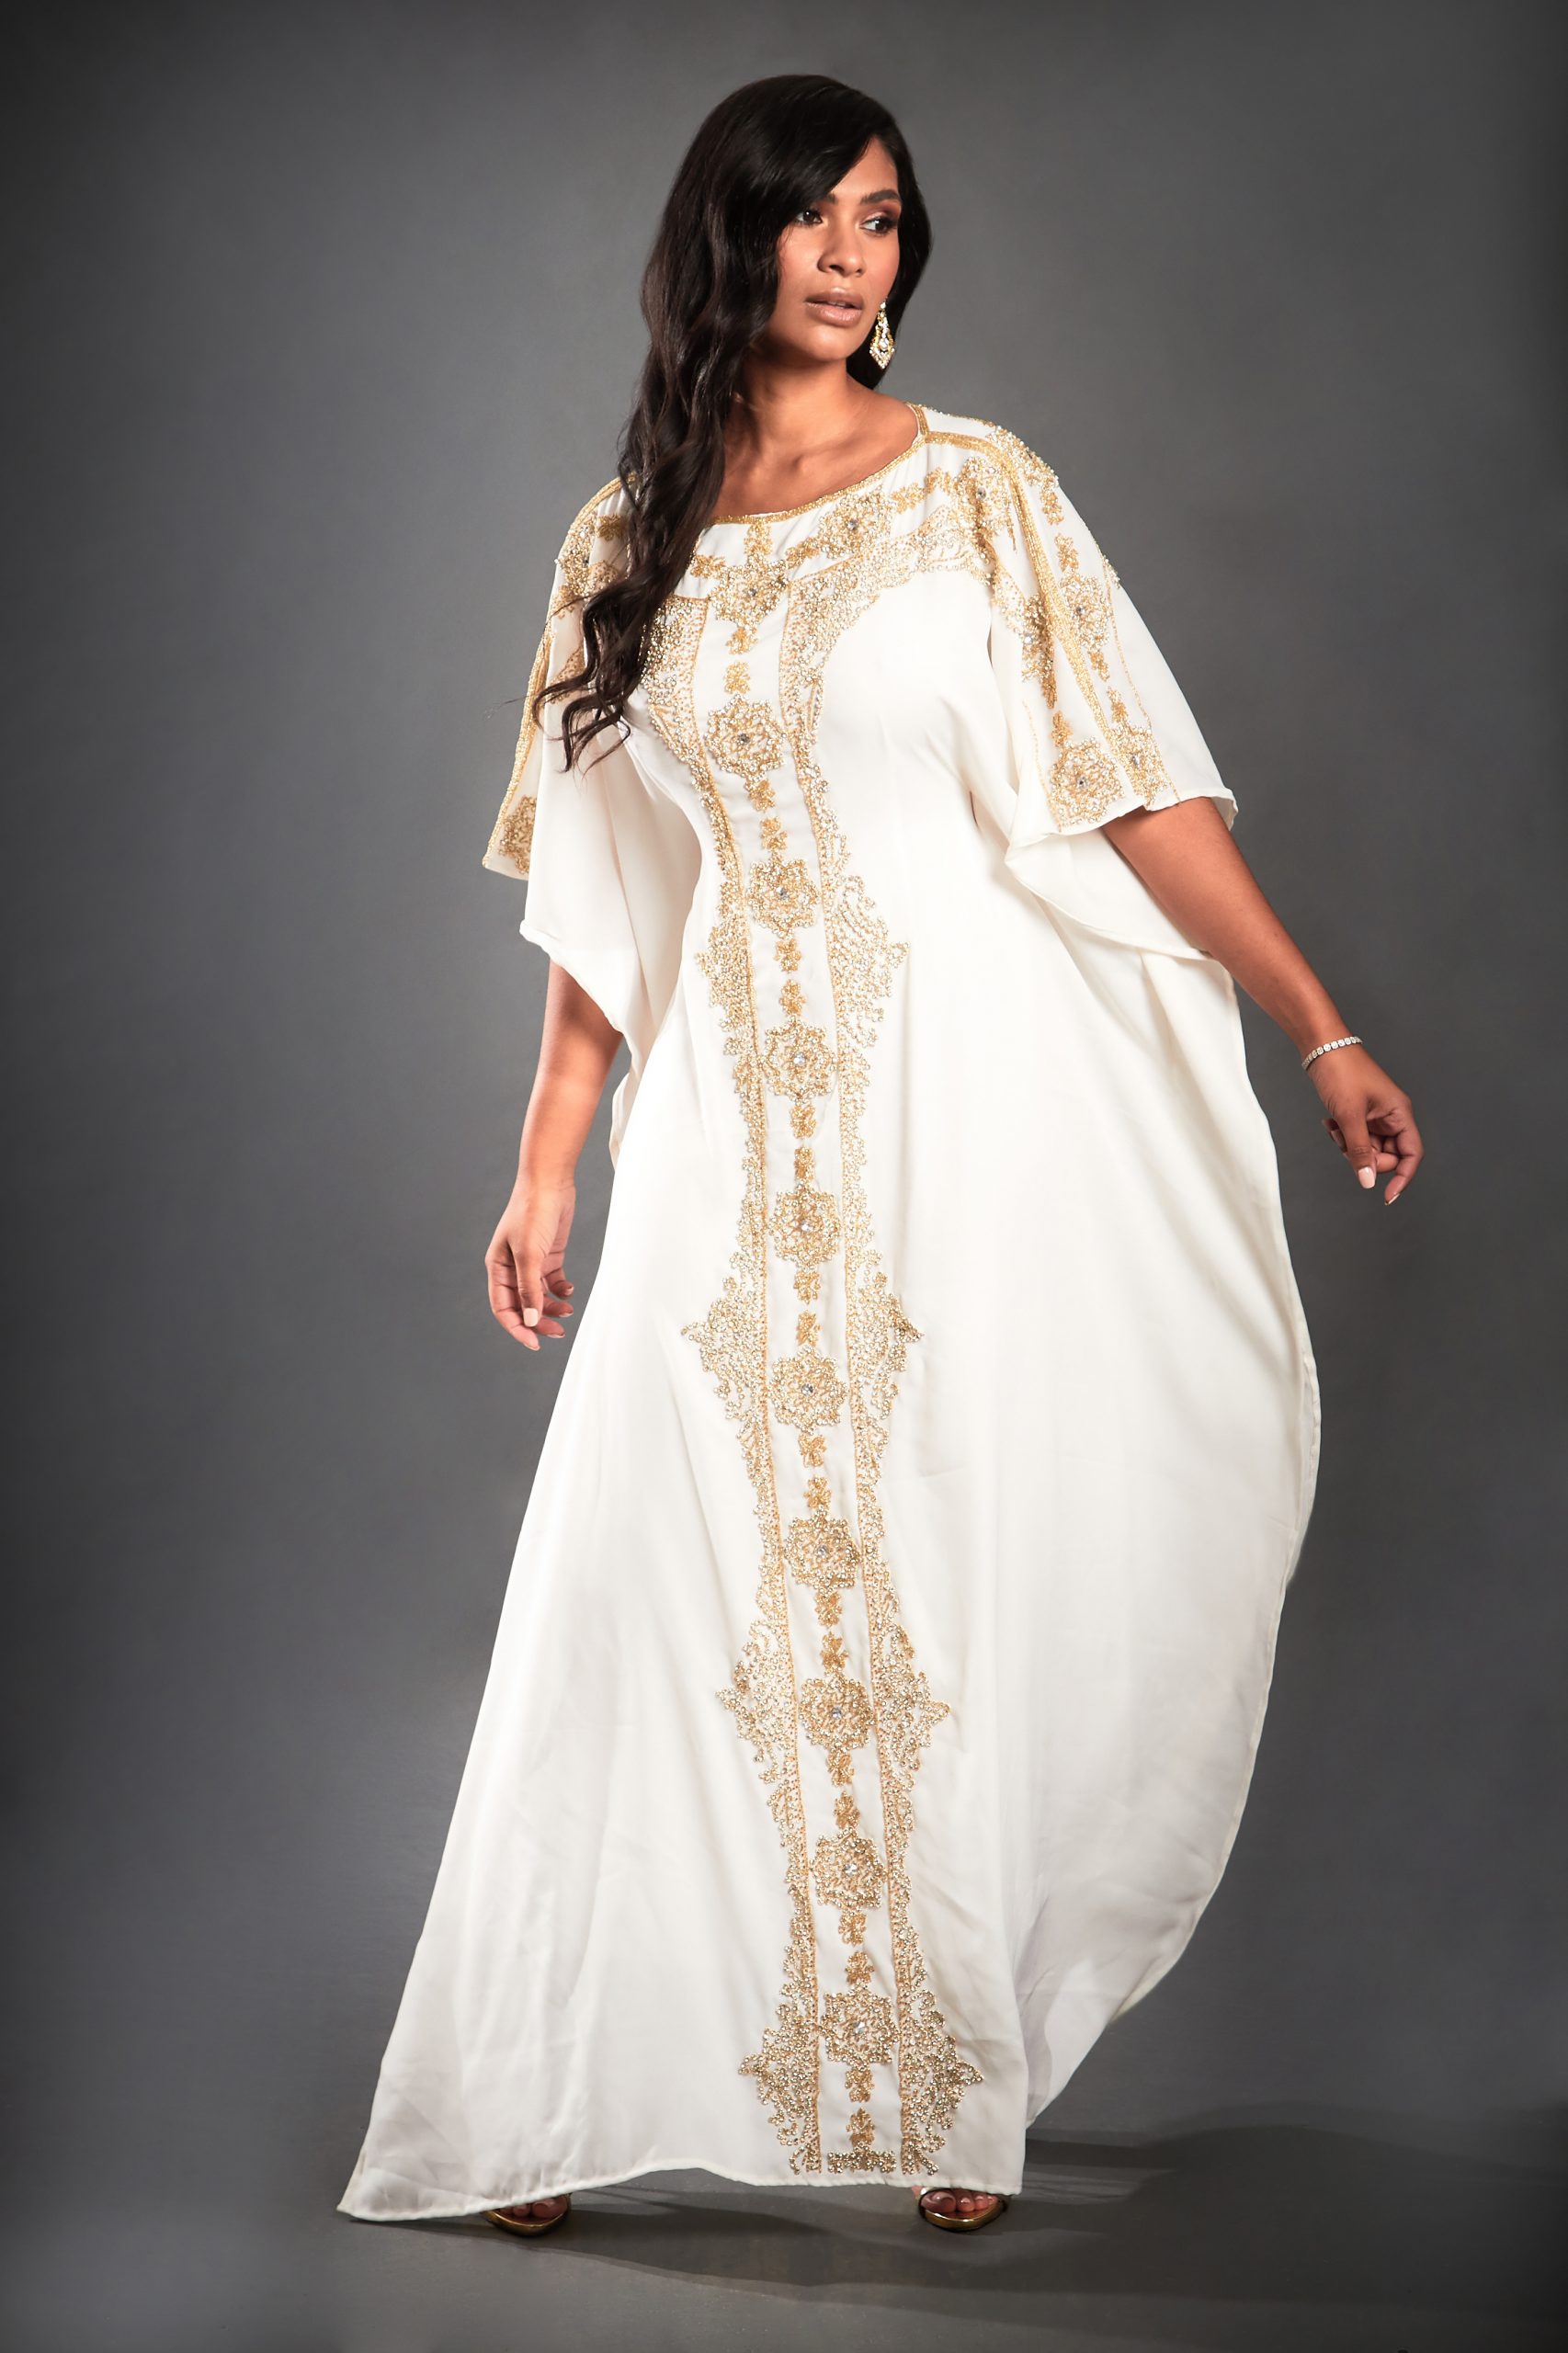 Aliya - Gold And Silver Embellished Kaftan Wedding Gown | Jywal London